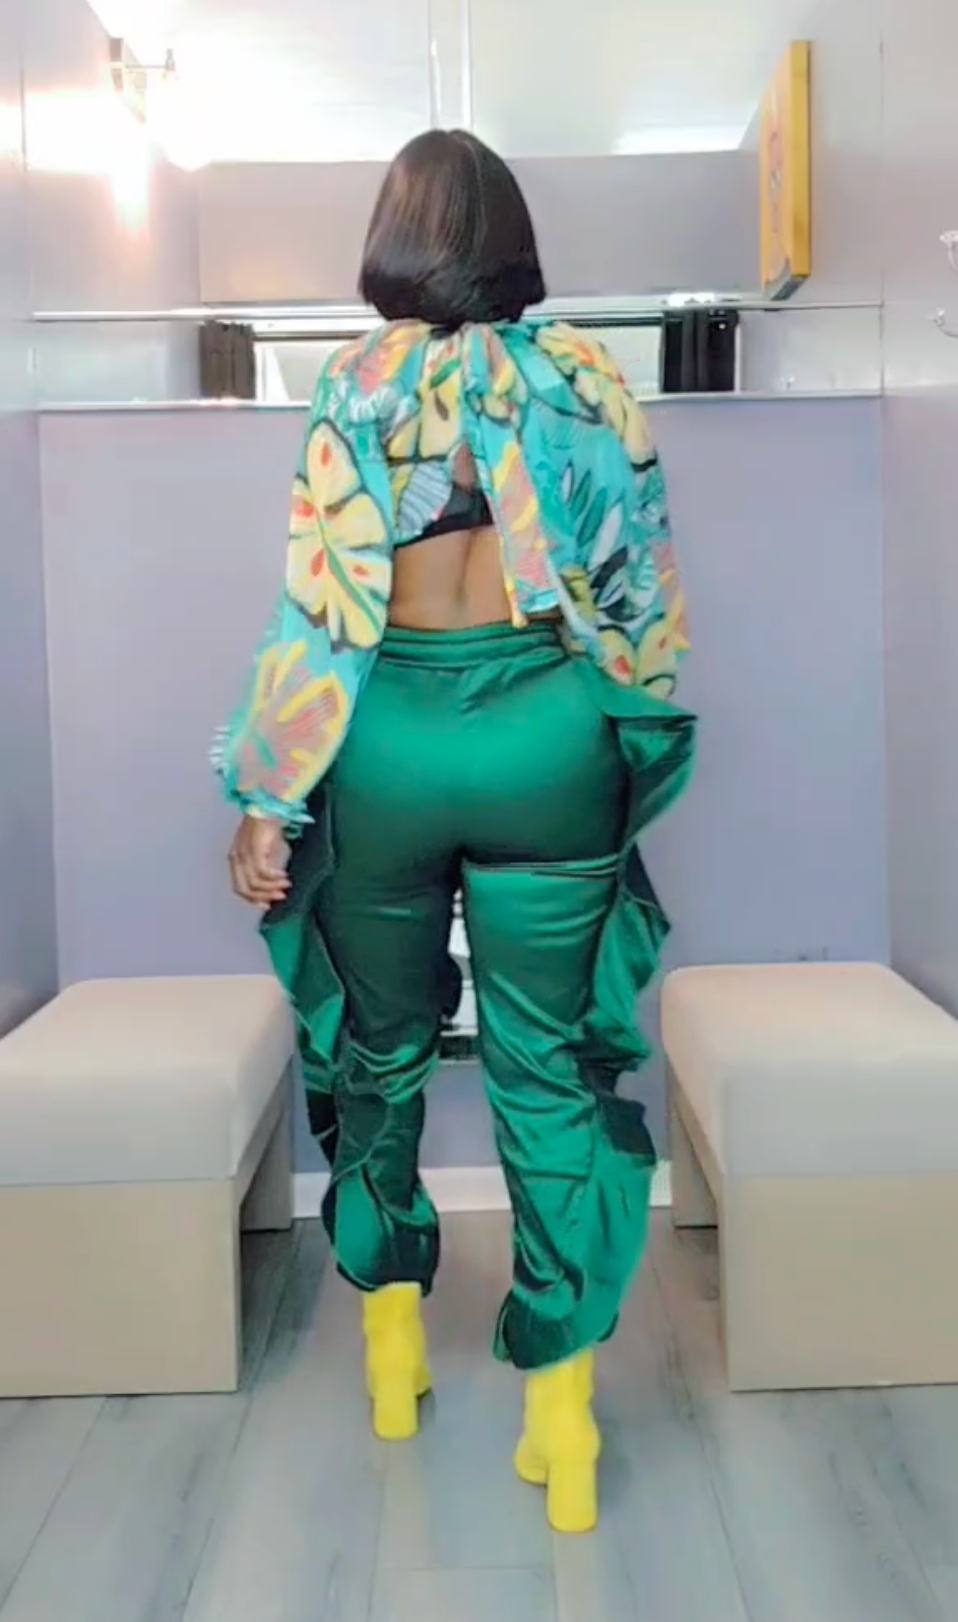 Green Ruffle Pants